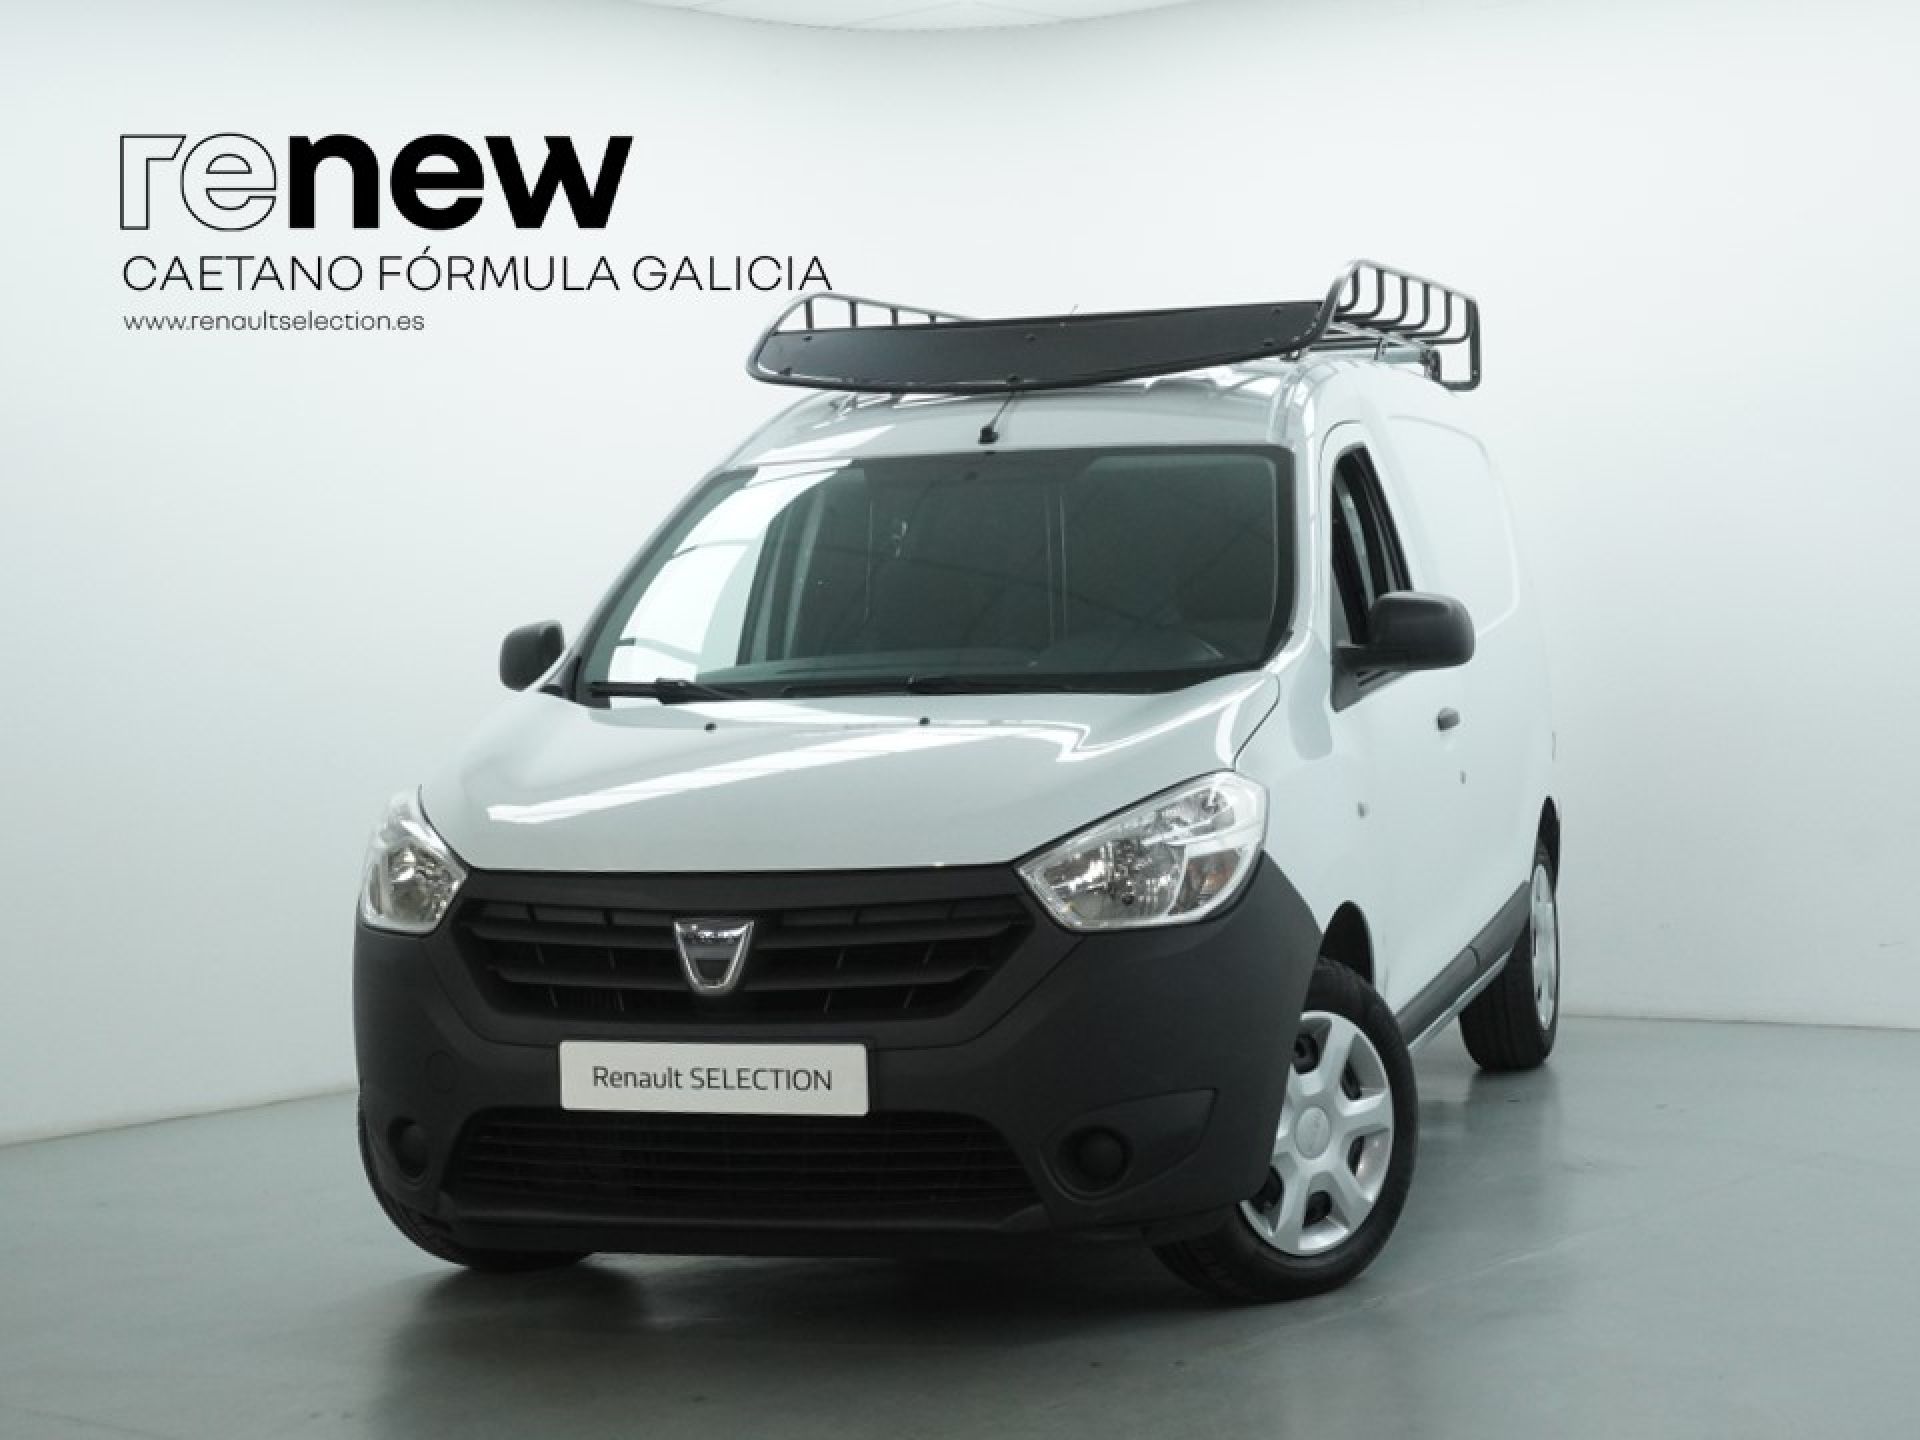 Dacia Dokker Van Essential 1.6 75kW GLP 2019 86700 kms Blanco (opaco) segunda mano Pontevedra (2889) | Caetano Cuzco